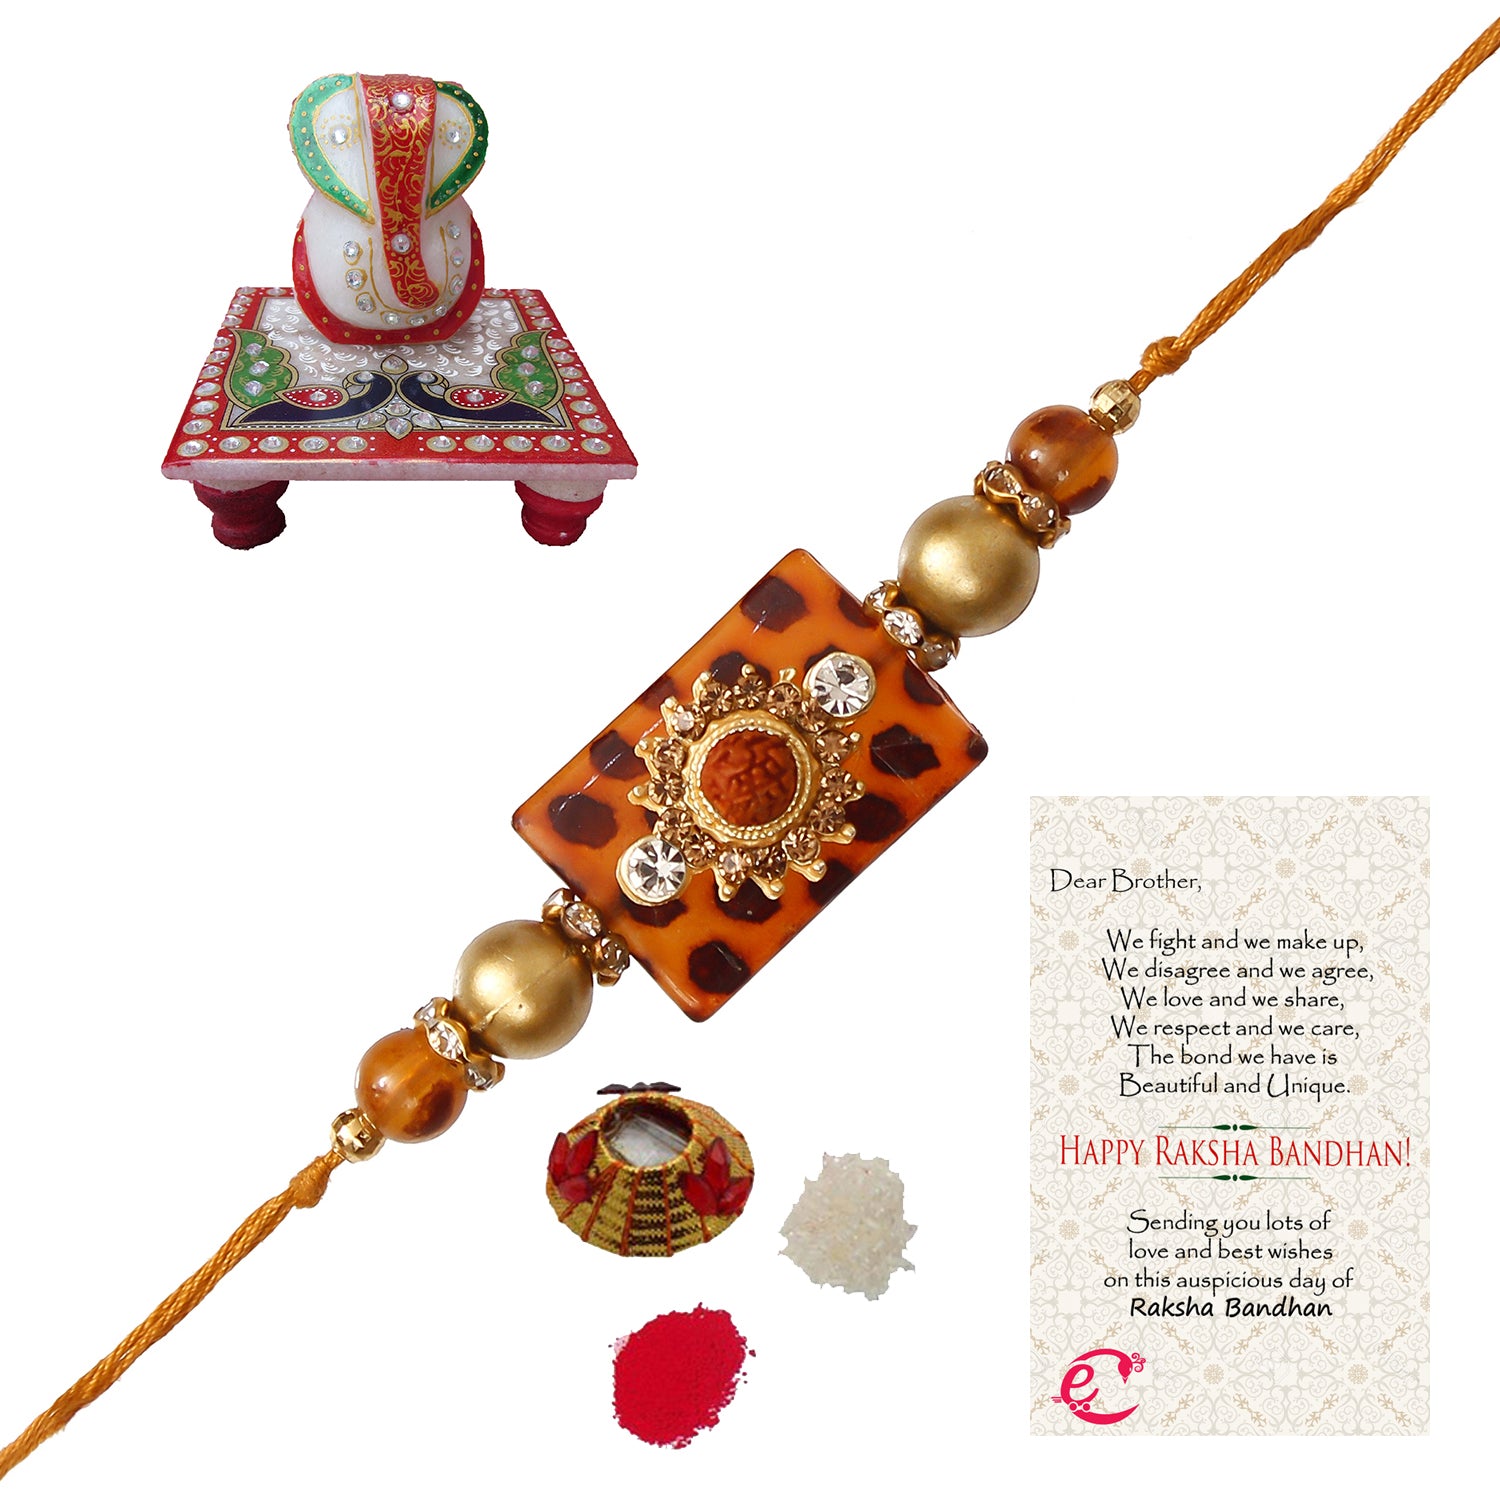 Stone Rudraksh Rakhi with Lord Ganesha Marble Chowki and Roli Tikka Matki, Best Wishes Greeting Card